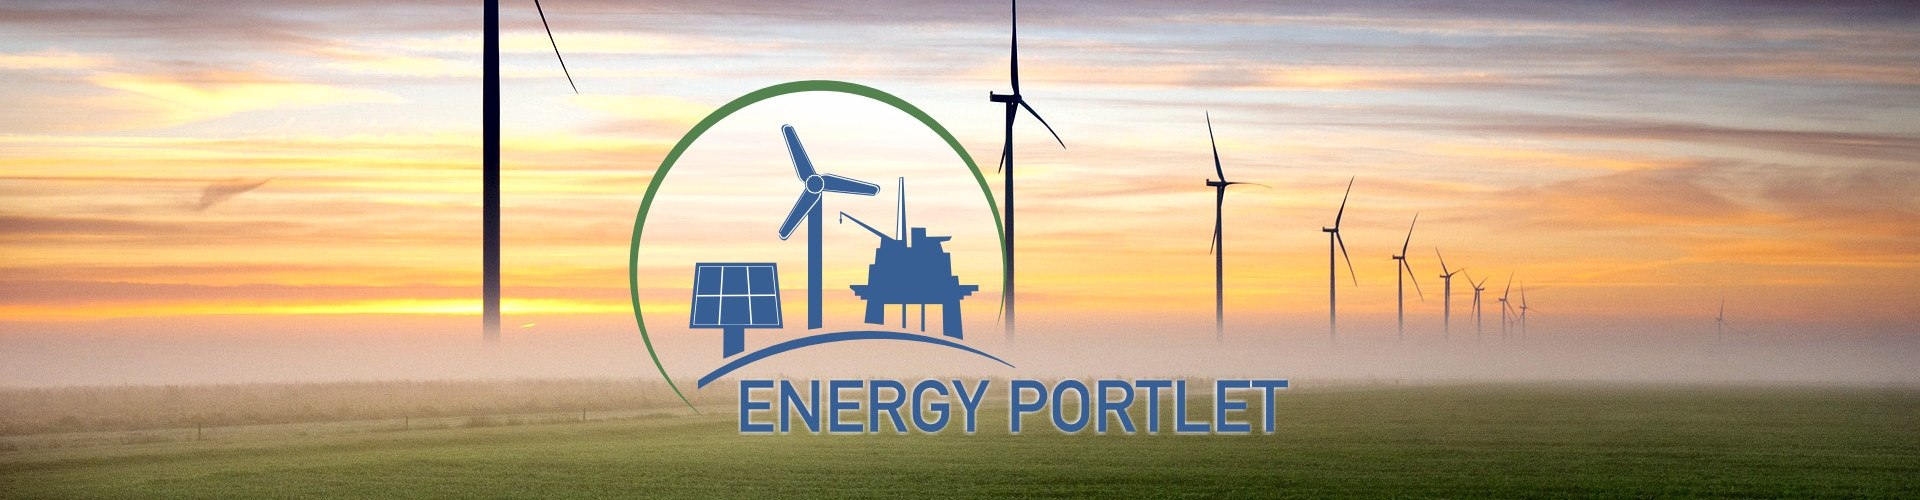 Energy Portlet - Wind energy farm